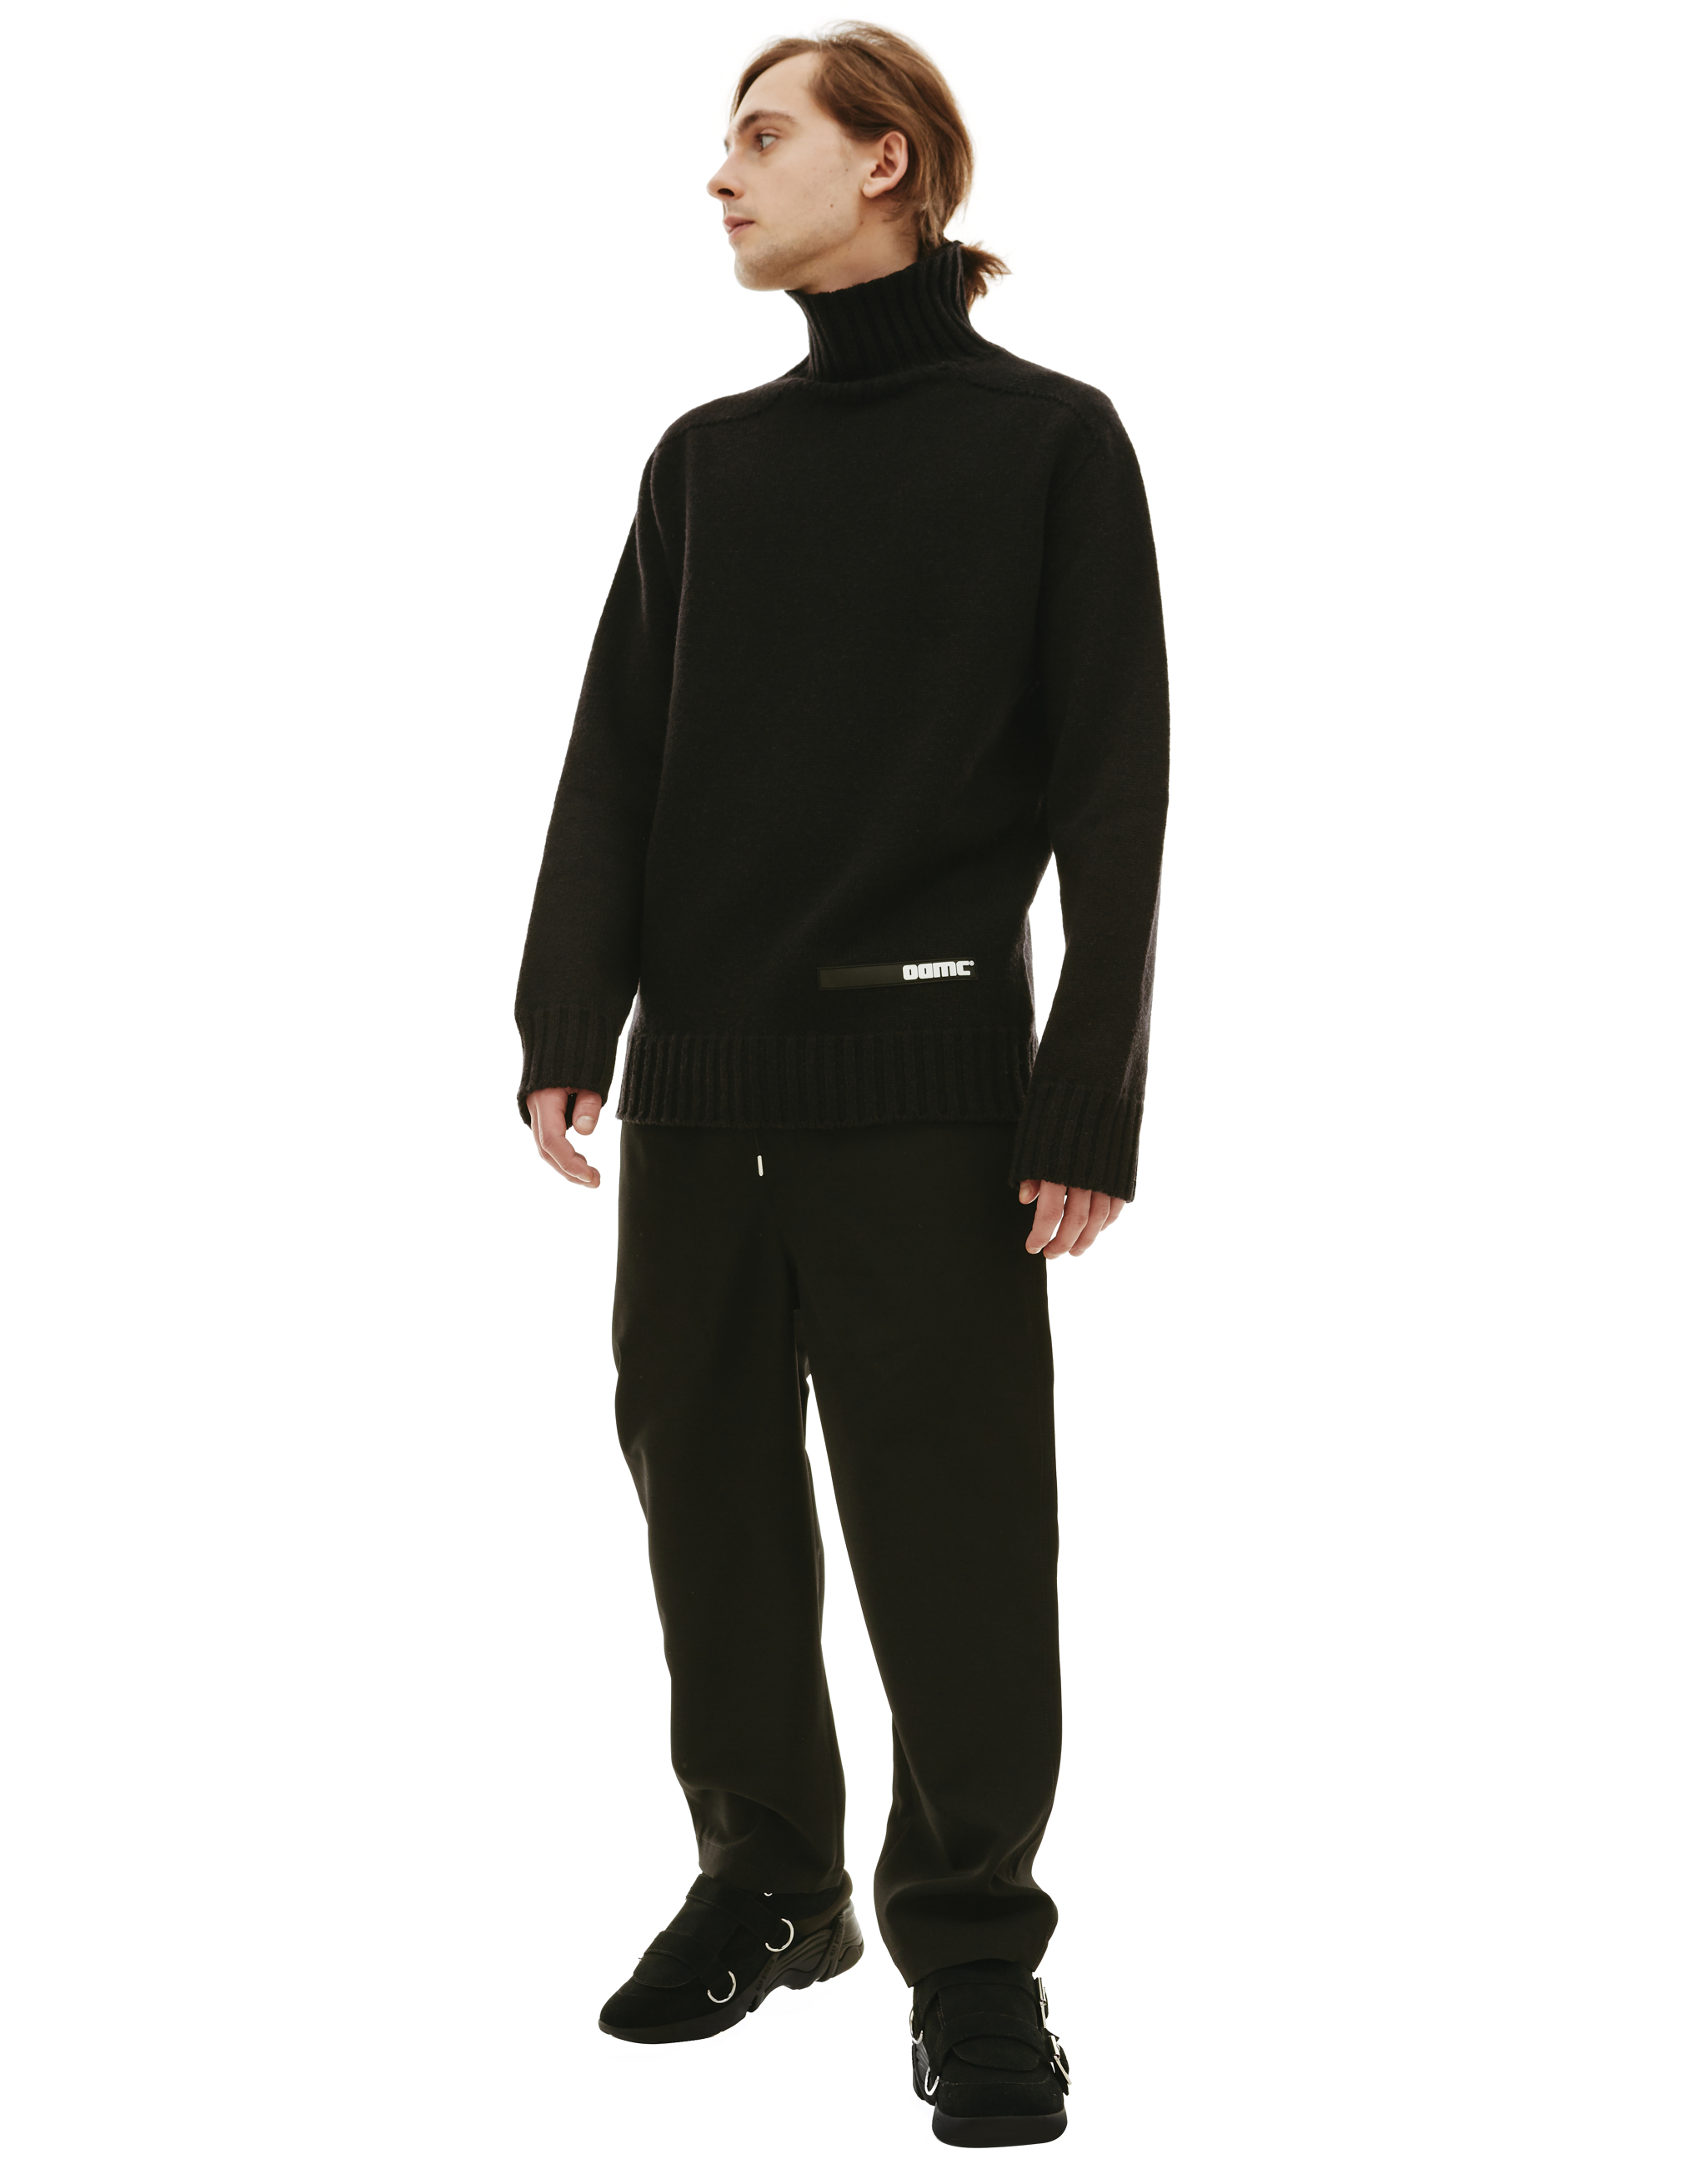 Шерстяной свитер Whistler OAMC 22A28OAK15/FLTOA12/001, размер XL;XXL;L